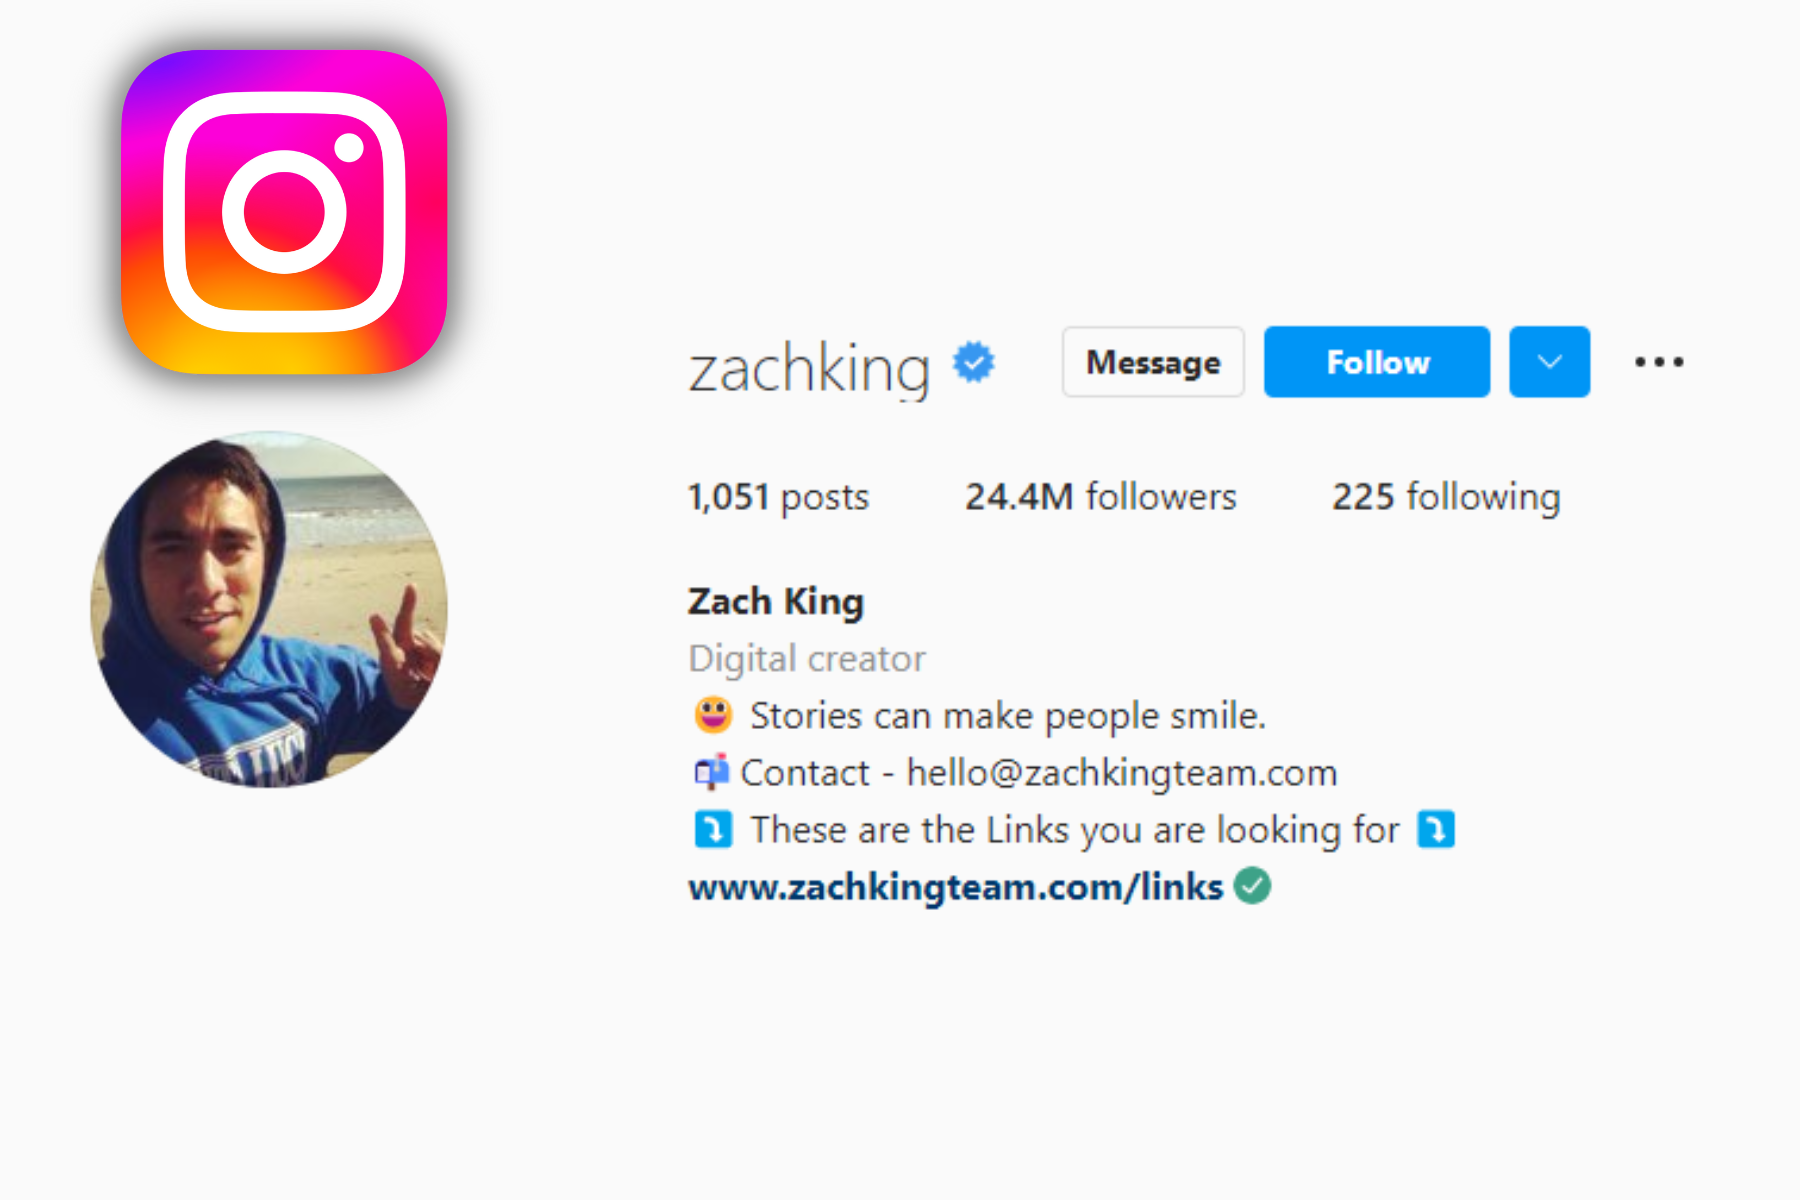 Zach King's Instagram account with 24.4 million followers